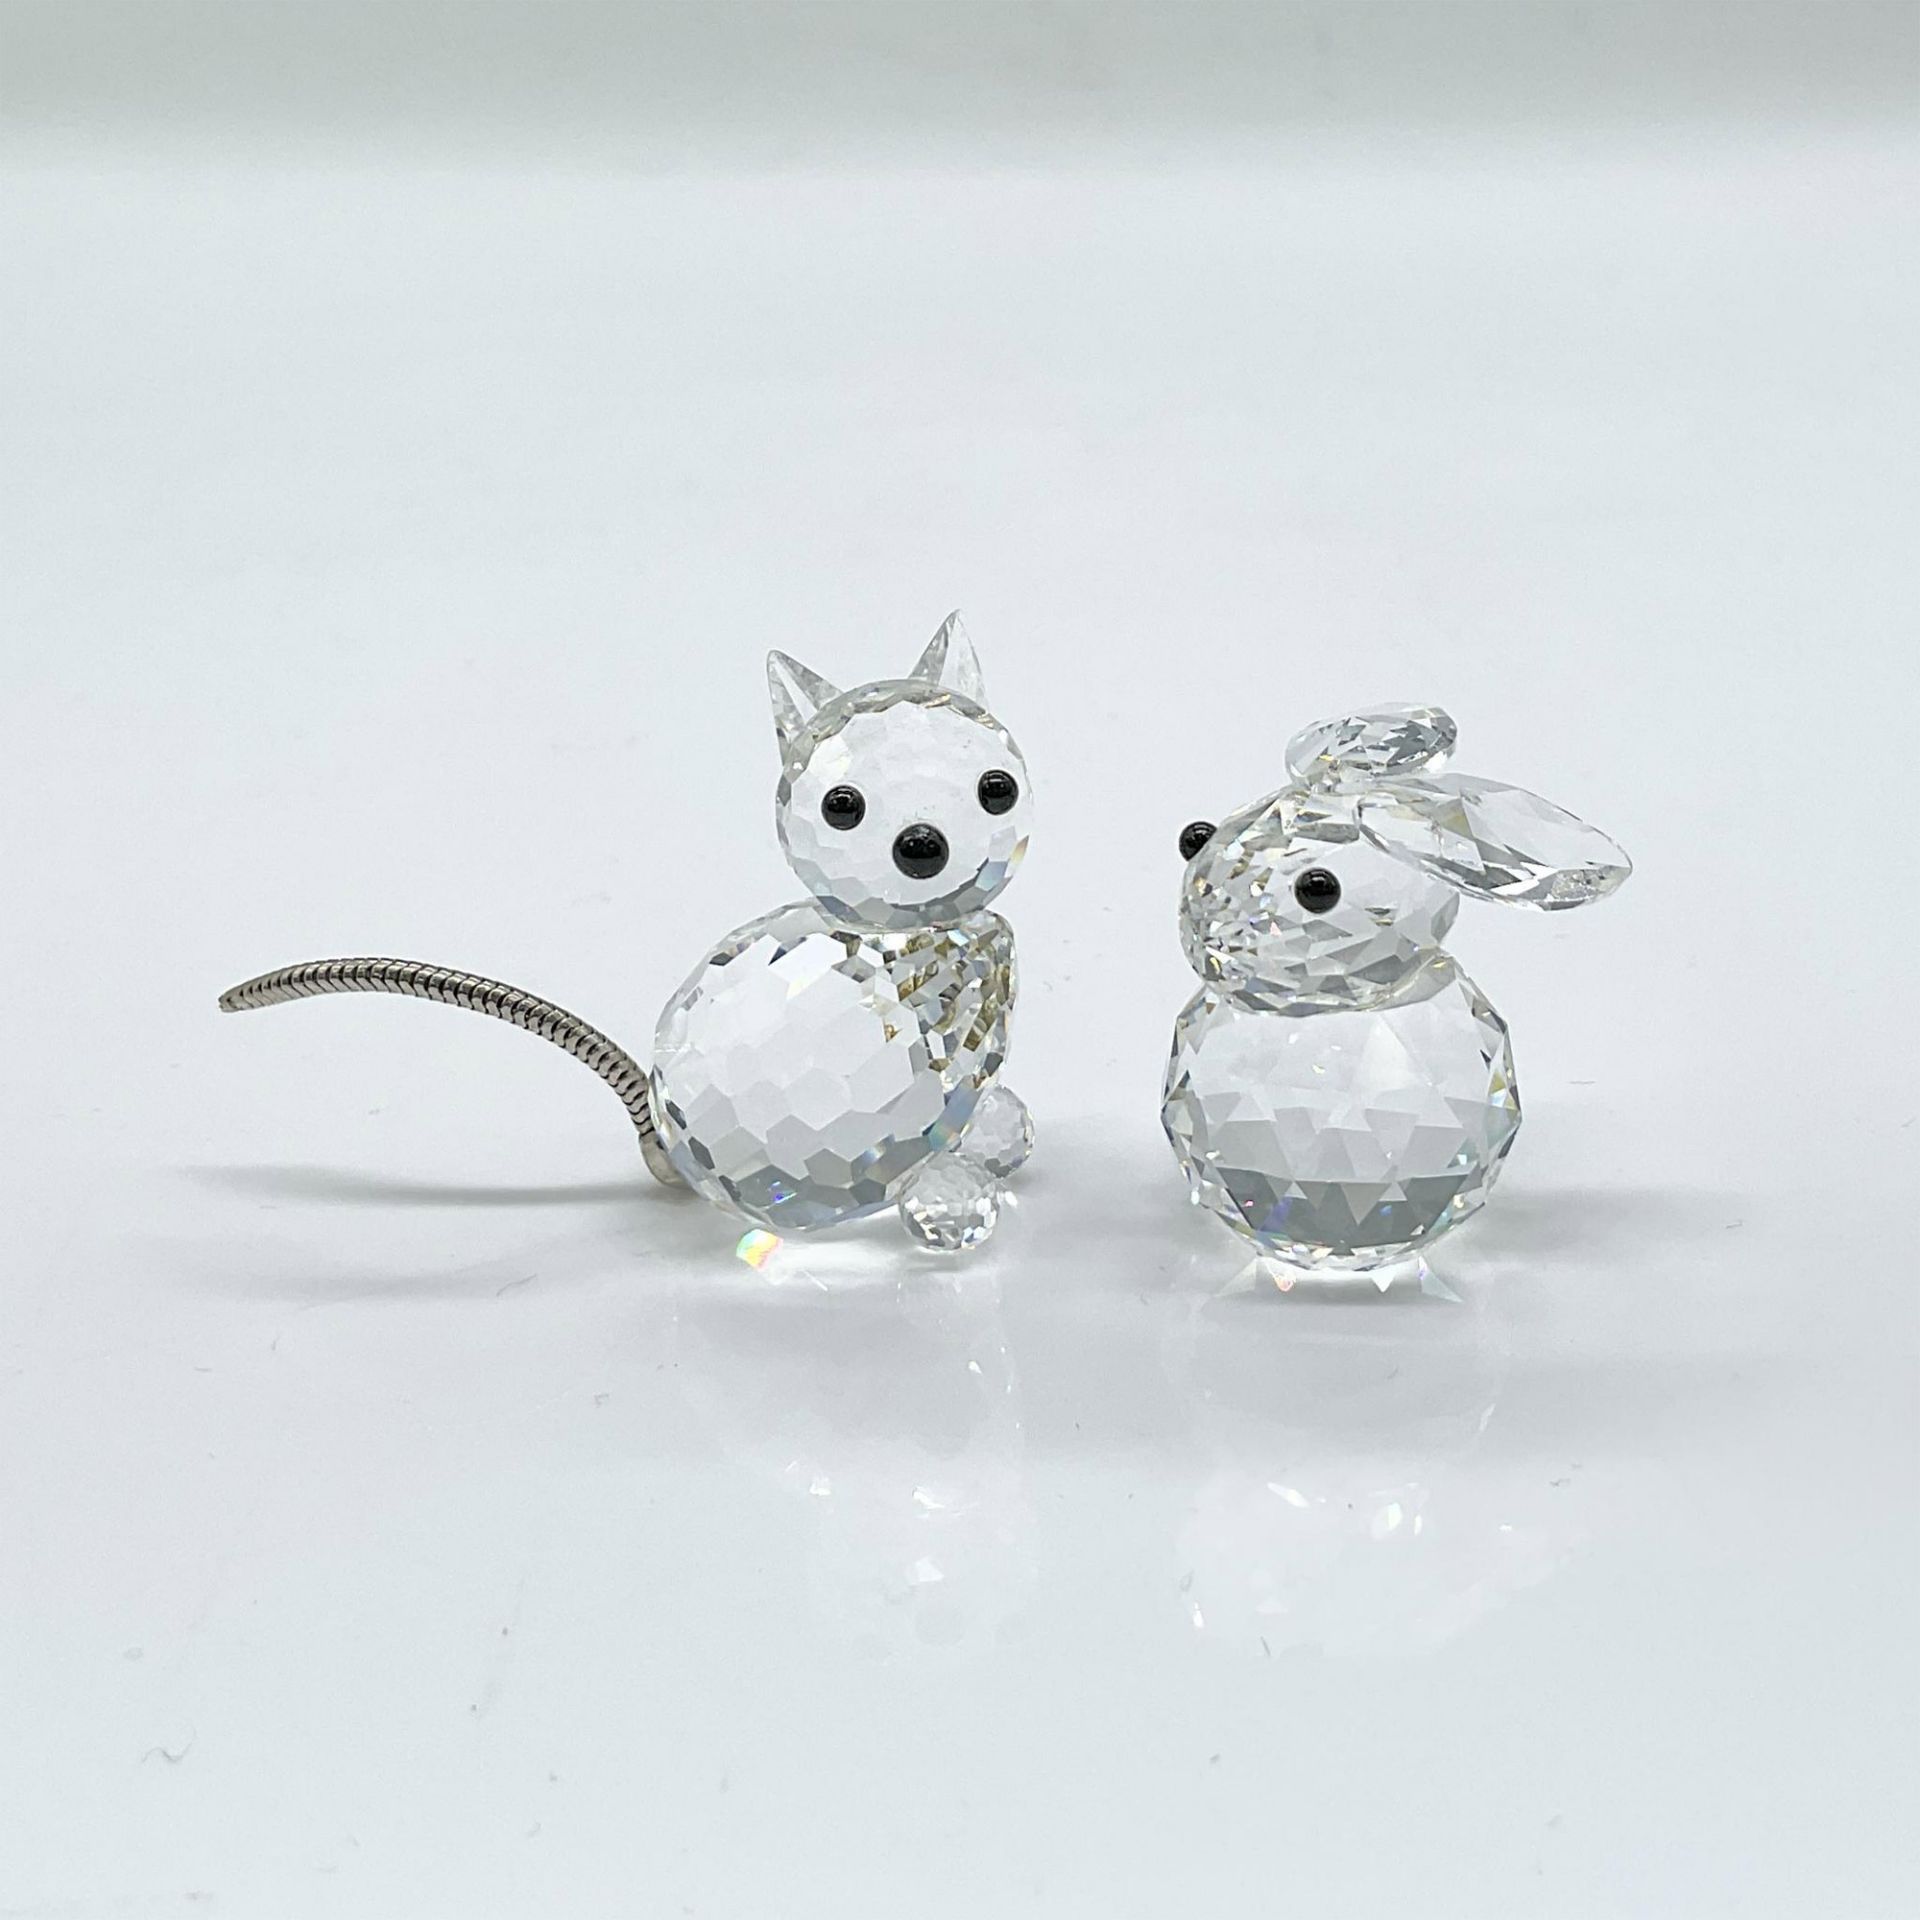 2pc Swarovski Crystal Figurines, Cat and Rabbit